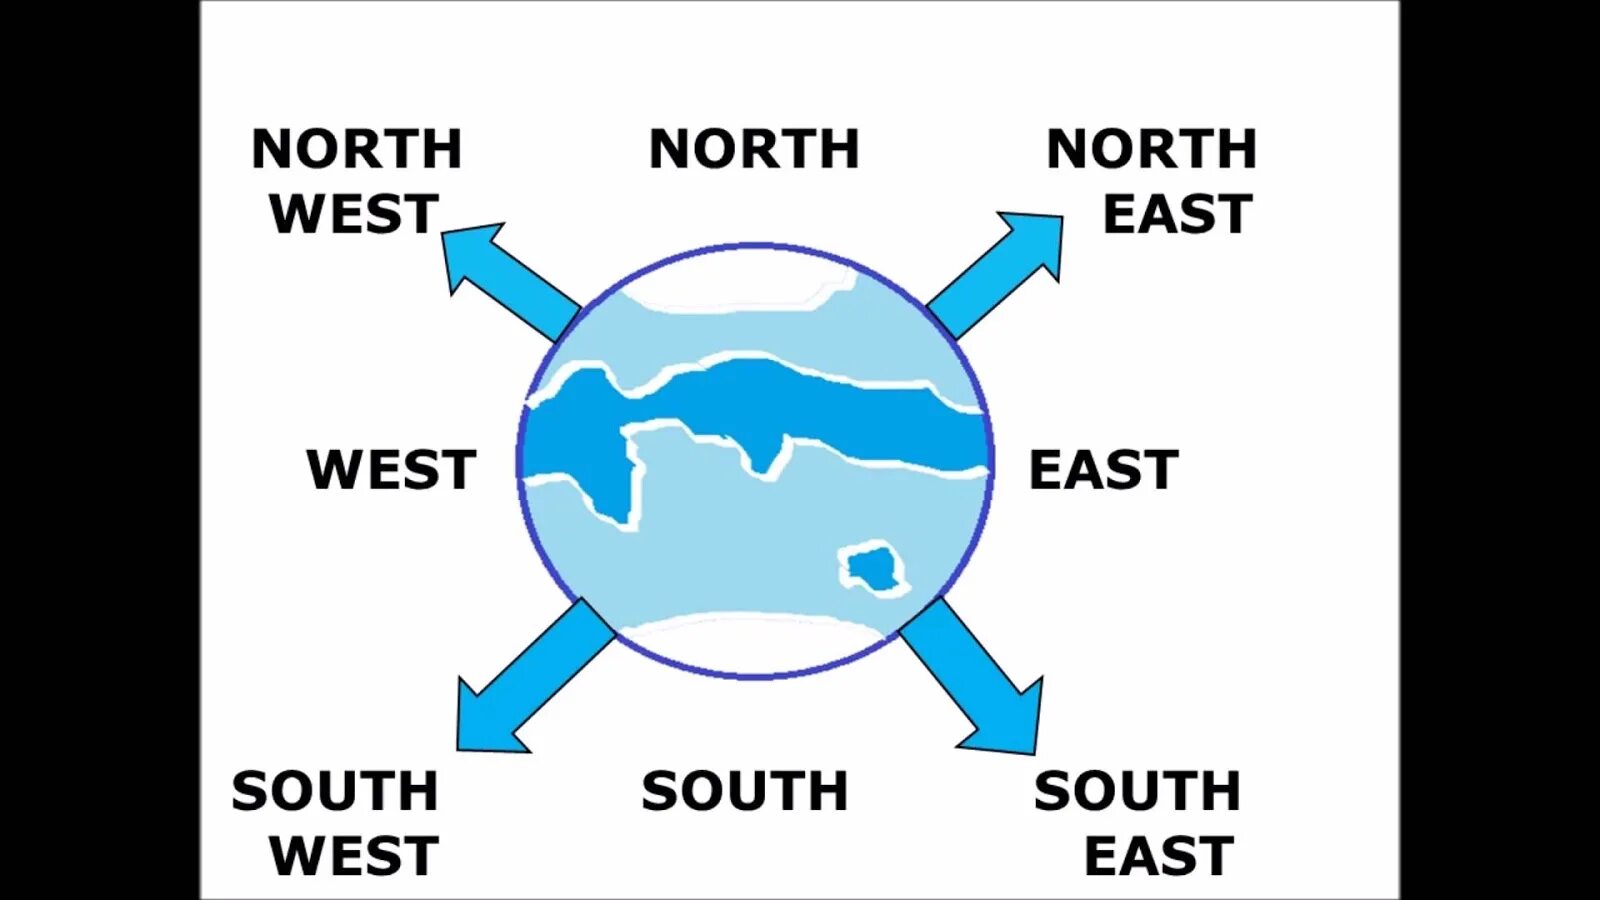 East west 12 участники. South East West. North South East West. South-West East South North-East North South-East West.